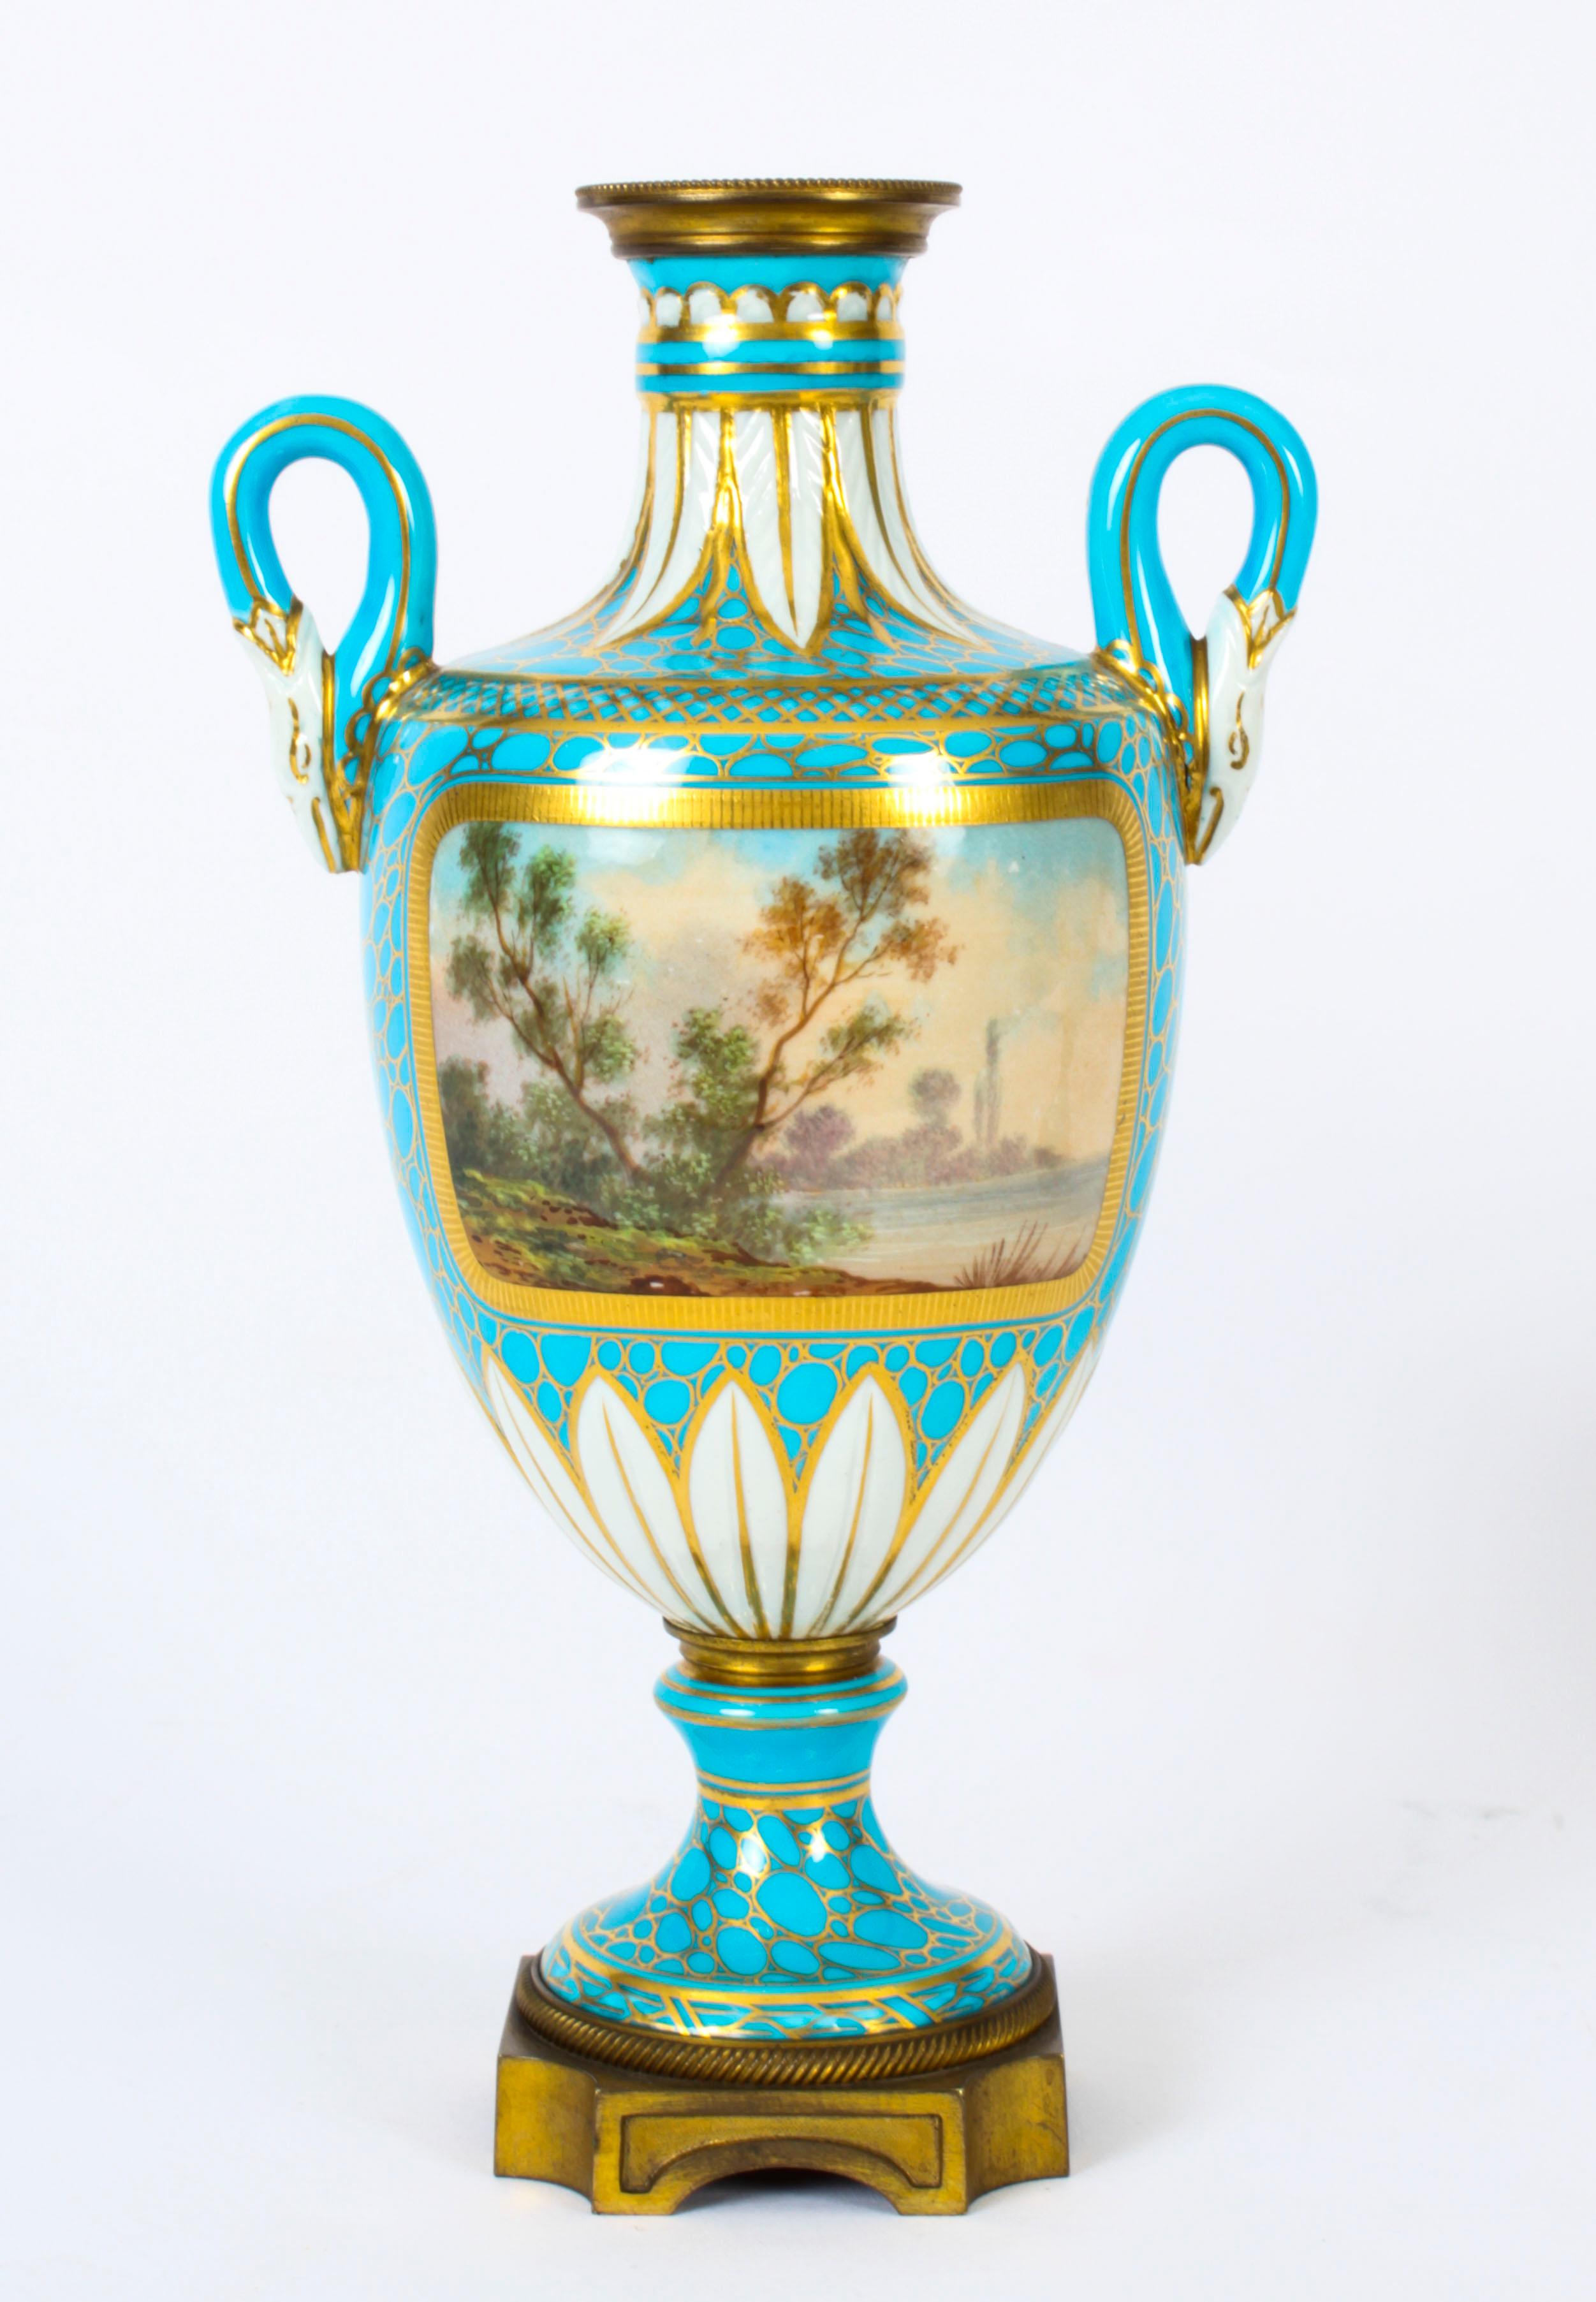 Antique Pair of French Bleu Celeste Porcelain Urns 19th Century For Sale 4